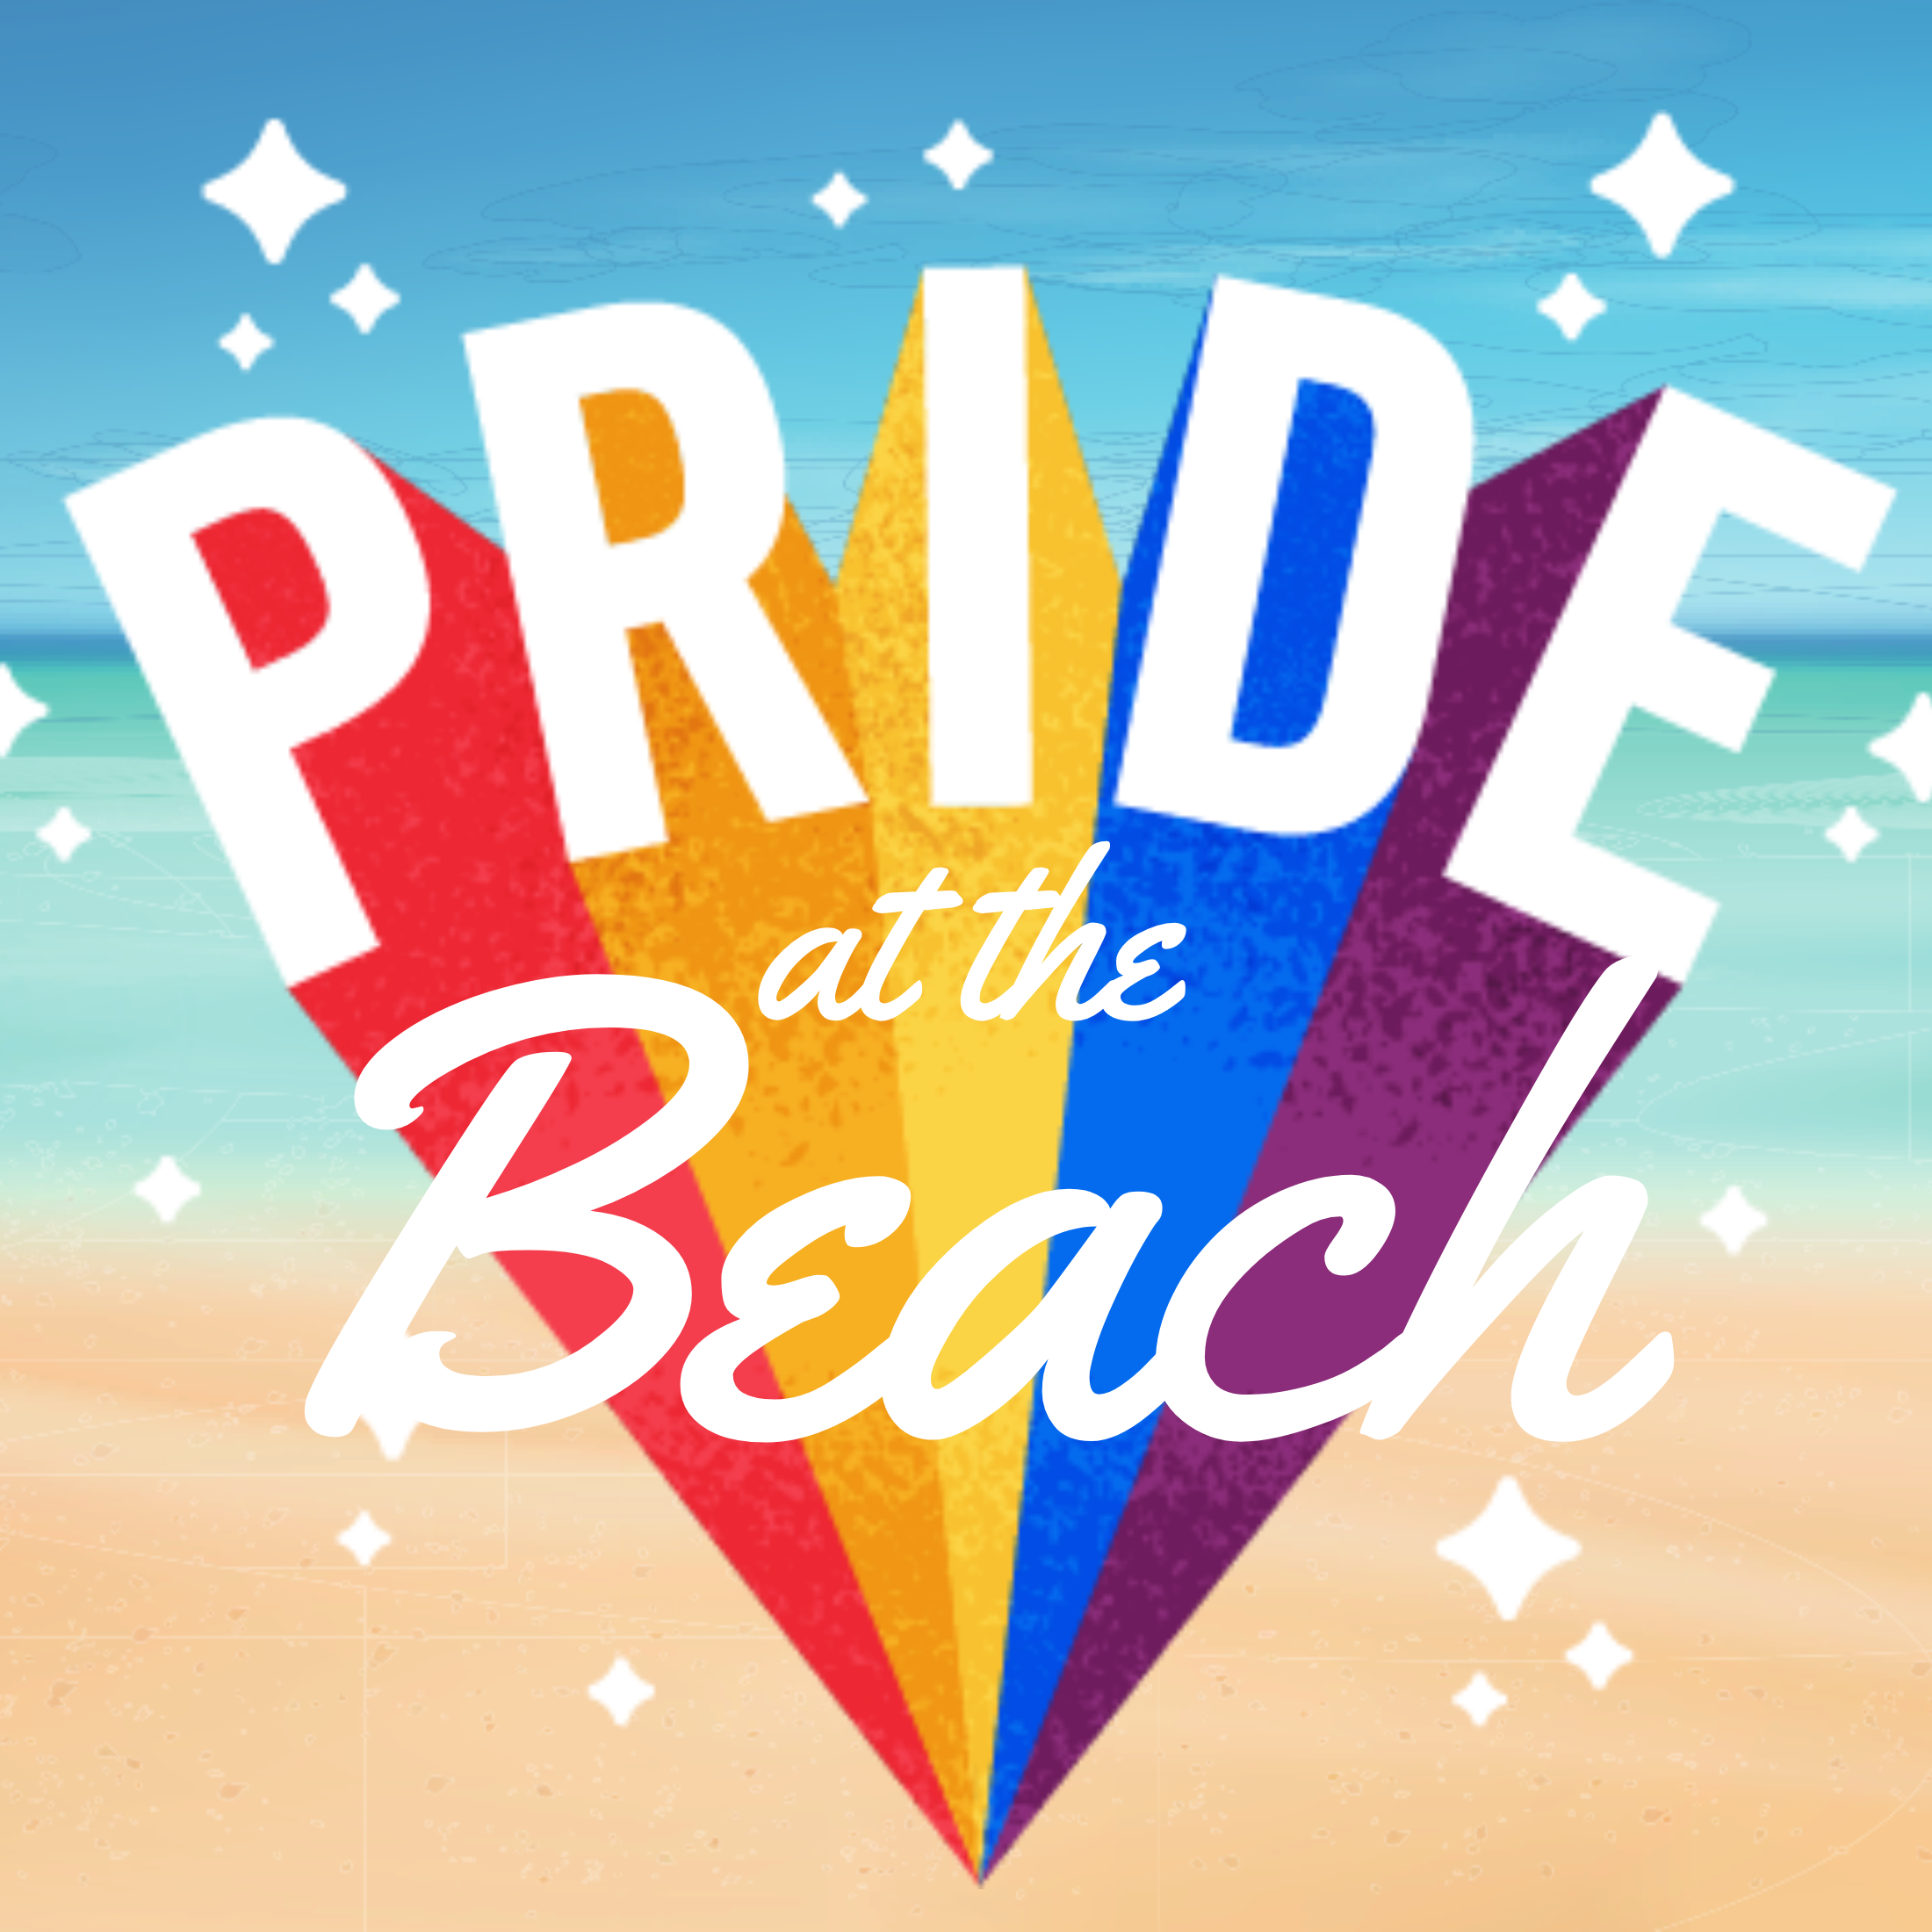 Pride at the beach